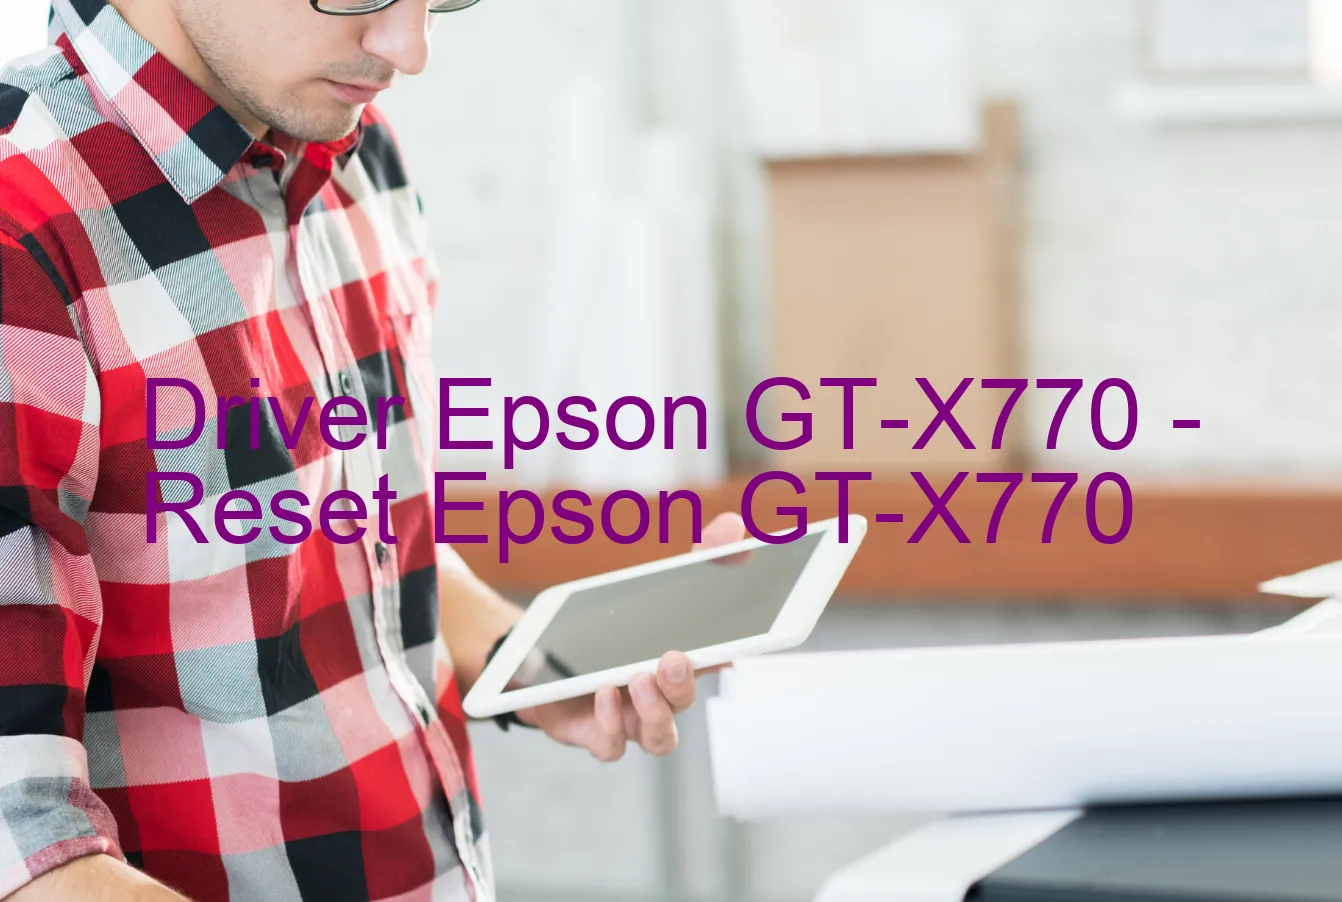 Epson GT-X770のドライバー、Epson GT-X770のリセットソフトウェア